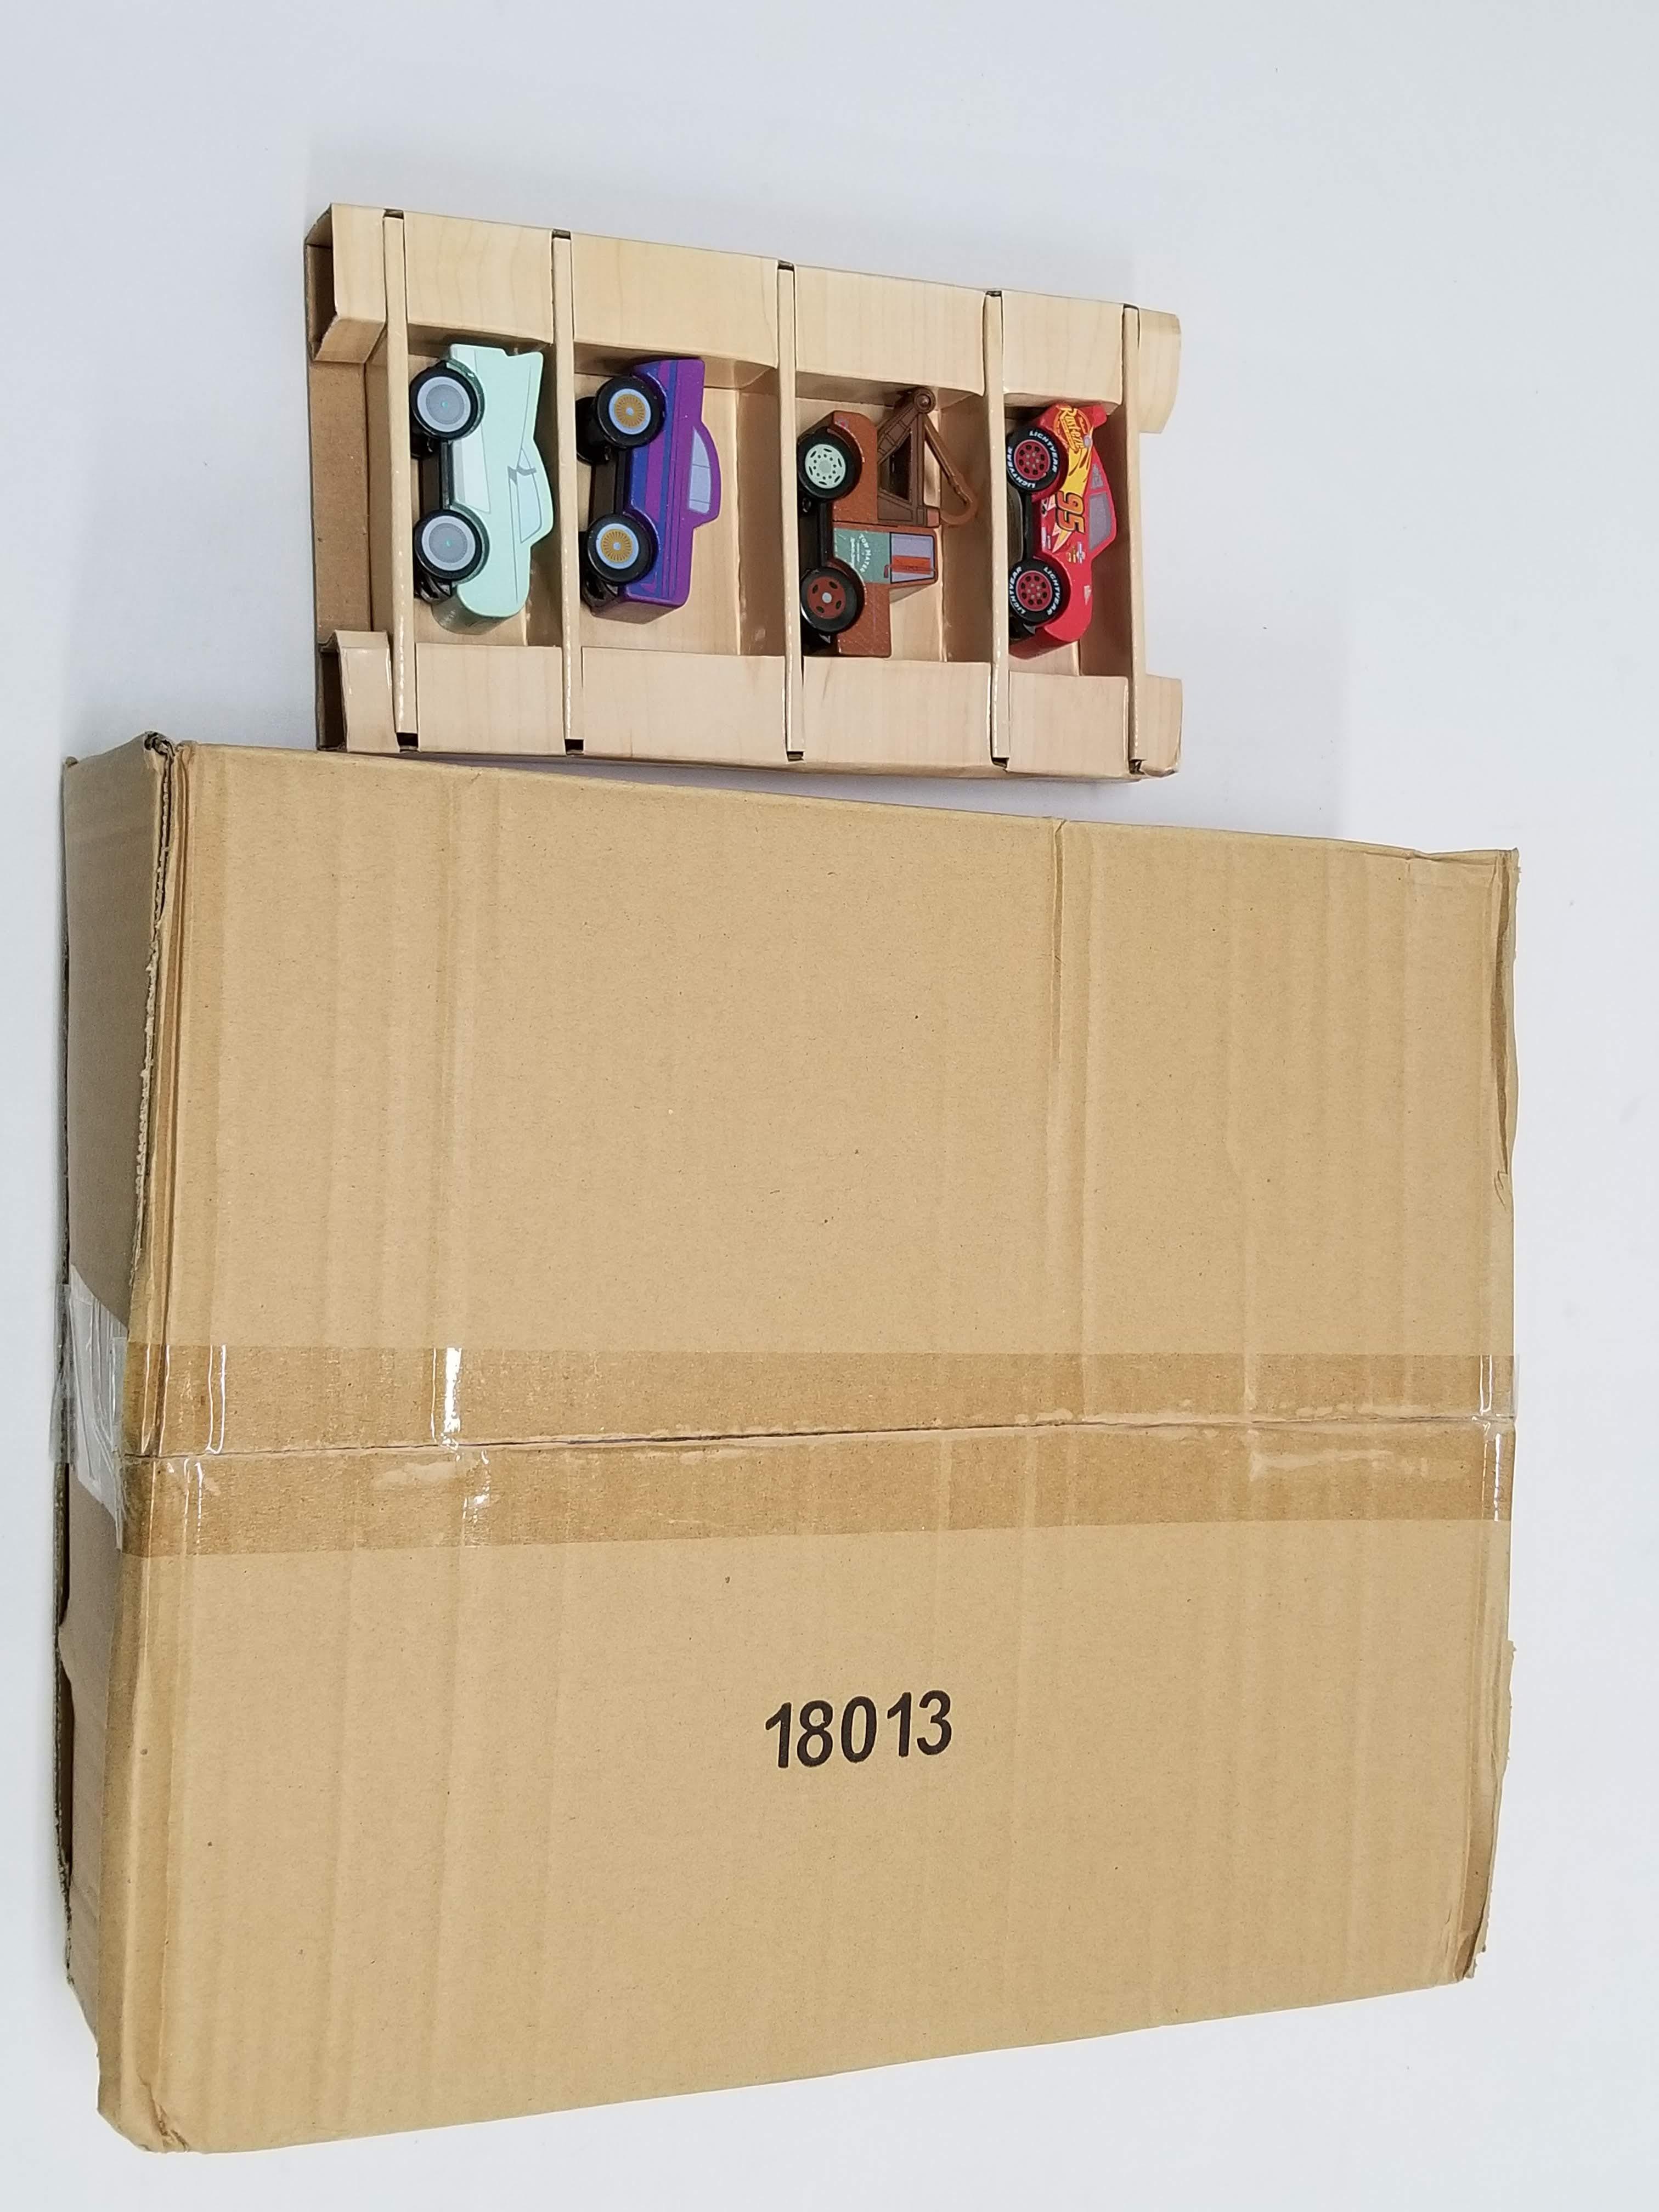 KidKraft Real Wood Cars 2 Playset - Box Damaged, Product New/Sealed